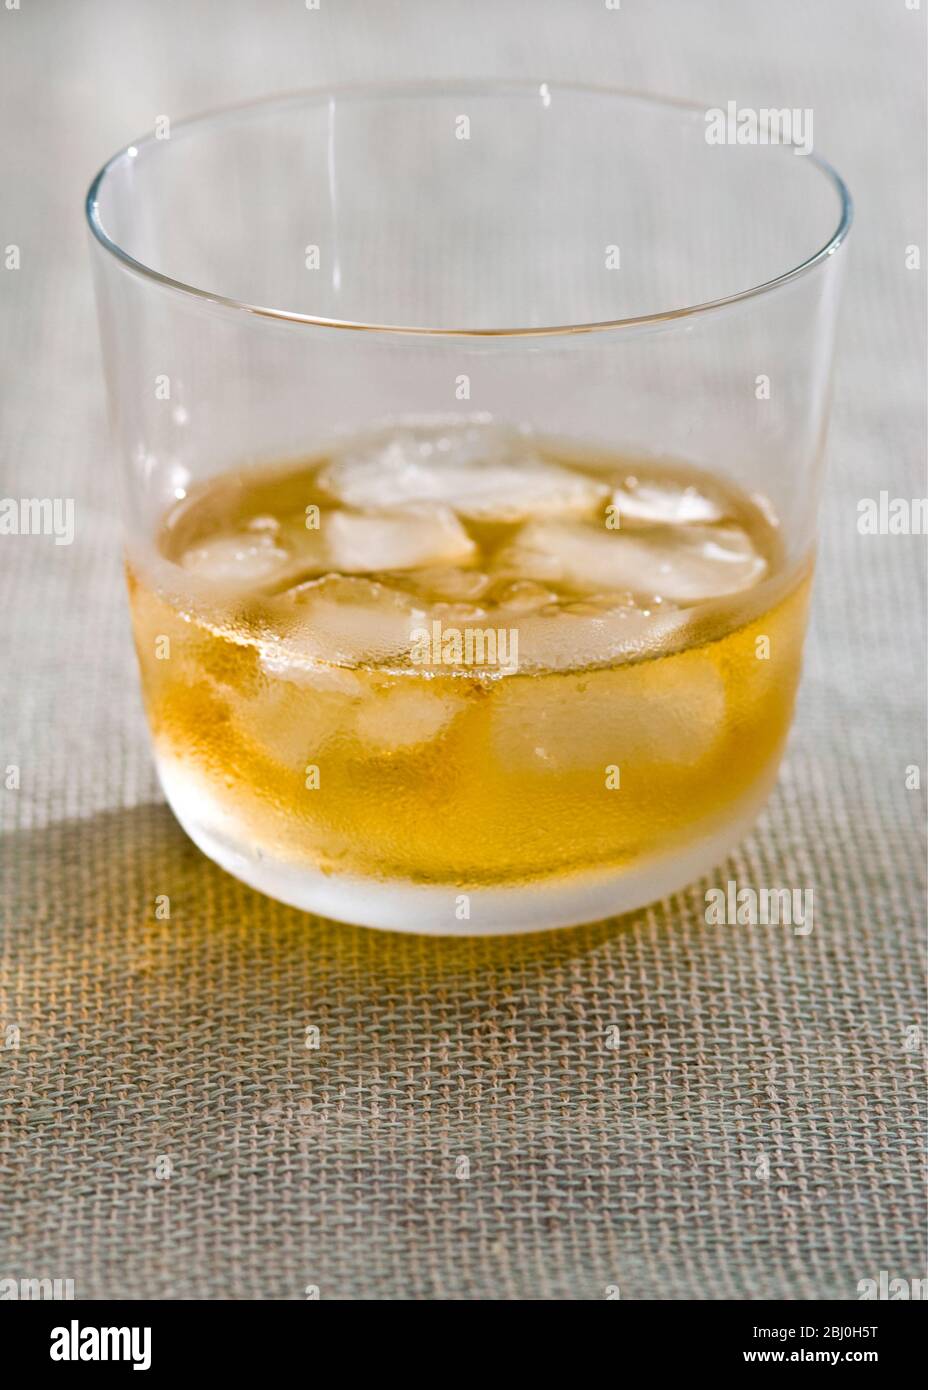 Glas Whisky mit Eis auf rauem hessischem Tuch - Stockfoto